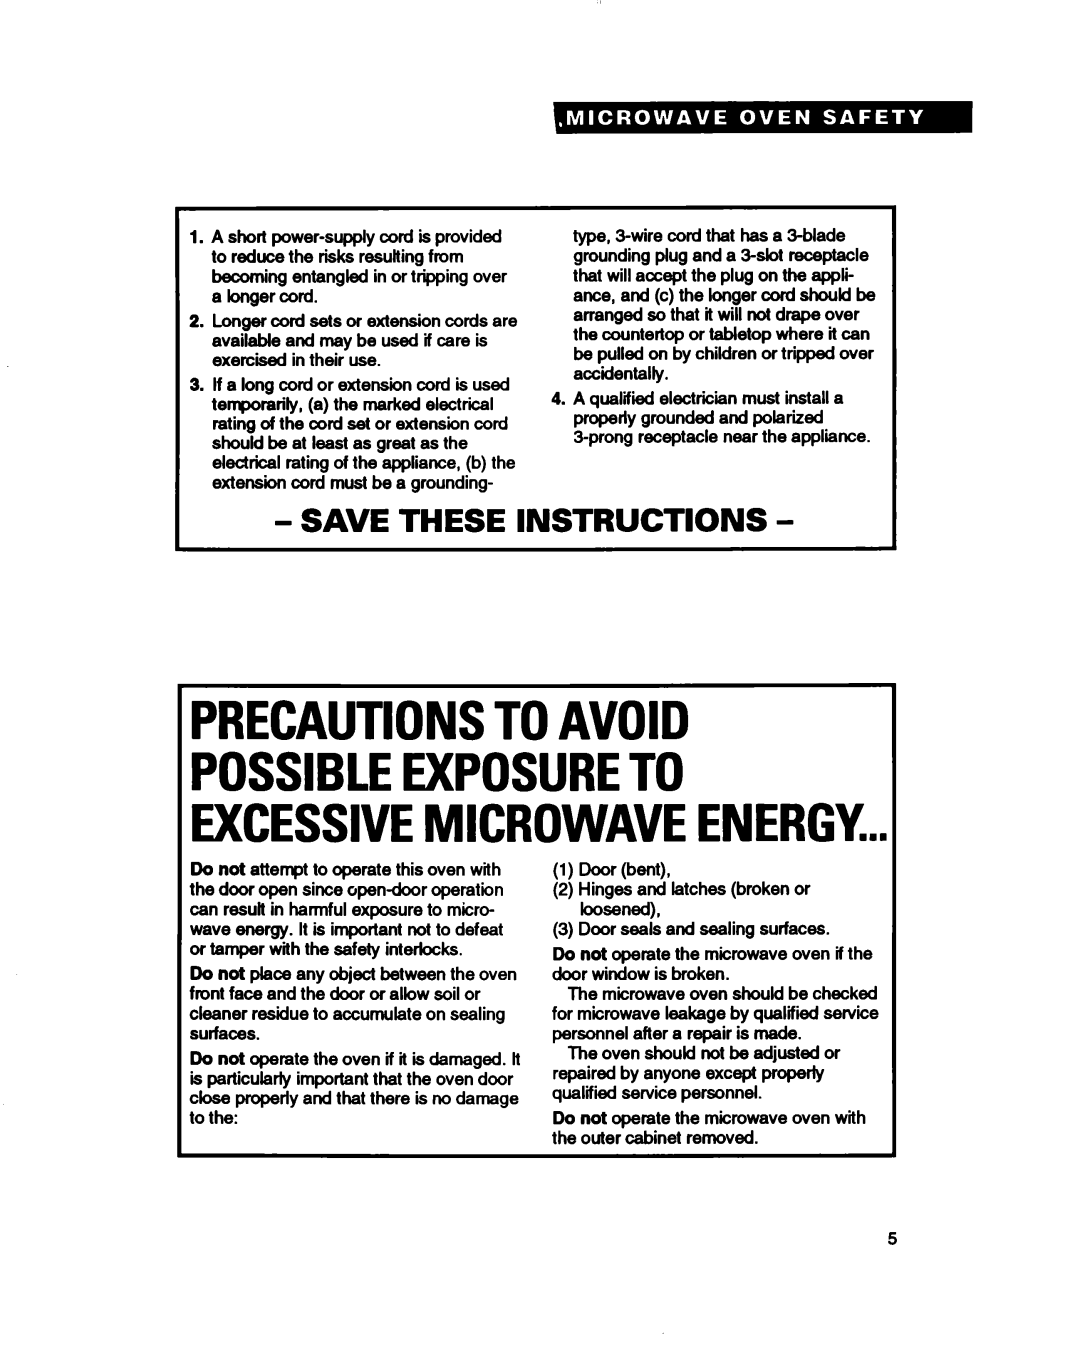 Whirlpool MH7115XB Save These Instructions, 1Door bwt, Precautionstoavoid, Possibleexposureto Excessivemicrowaveenergy 